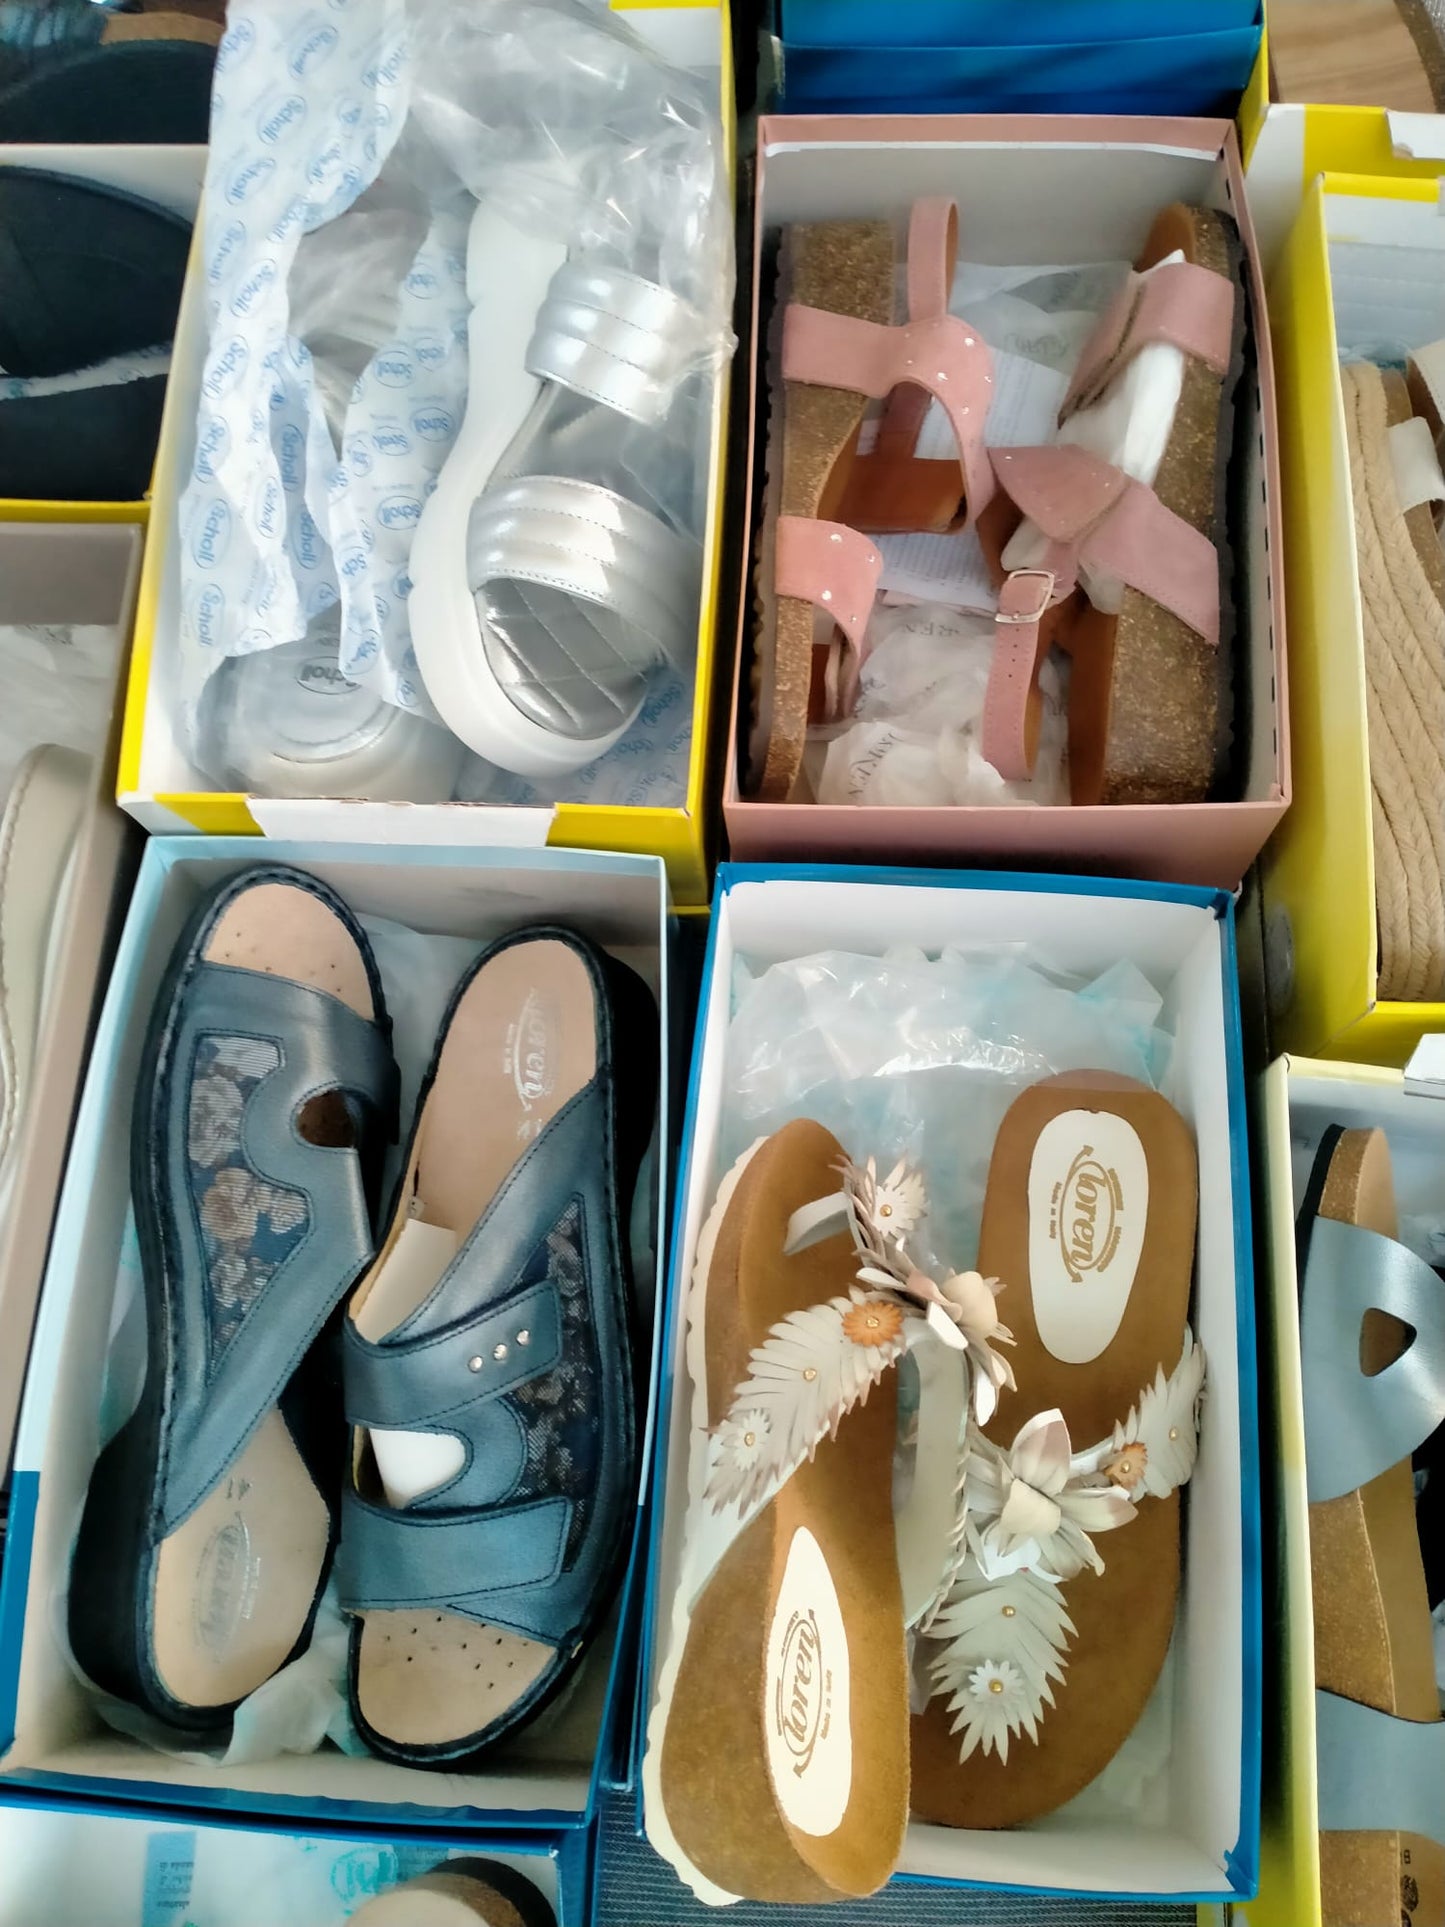 €15.00 per pair SCHOLL, LOREN women's footwear stock approximately 500 pairs - S/S - REF. 6139P1